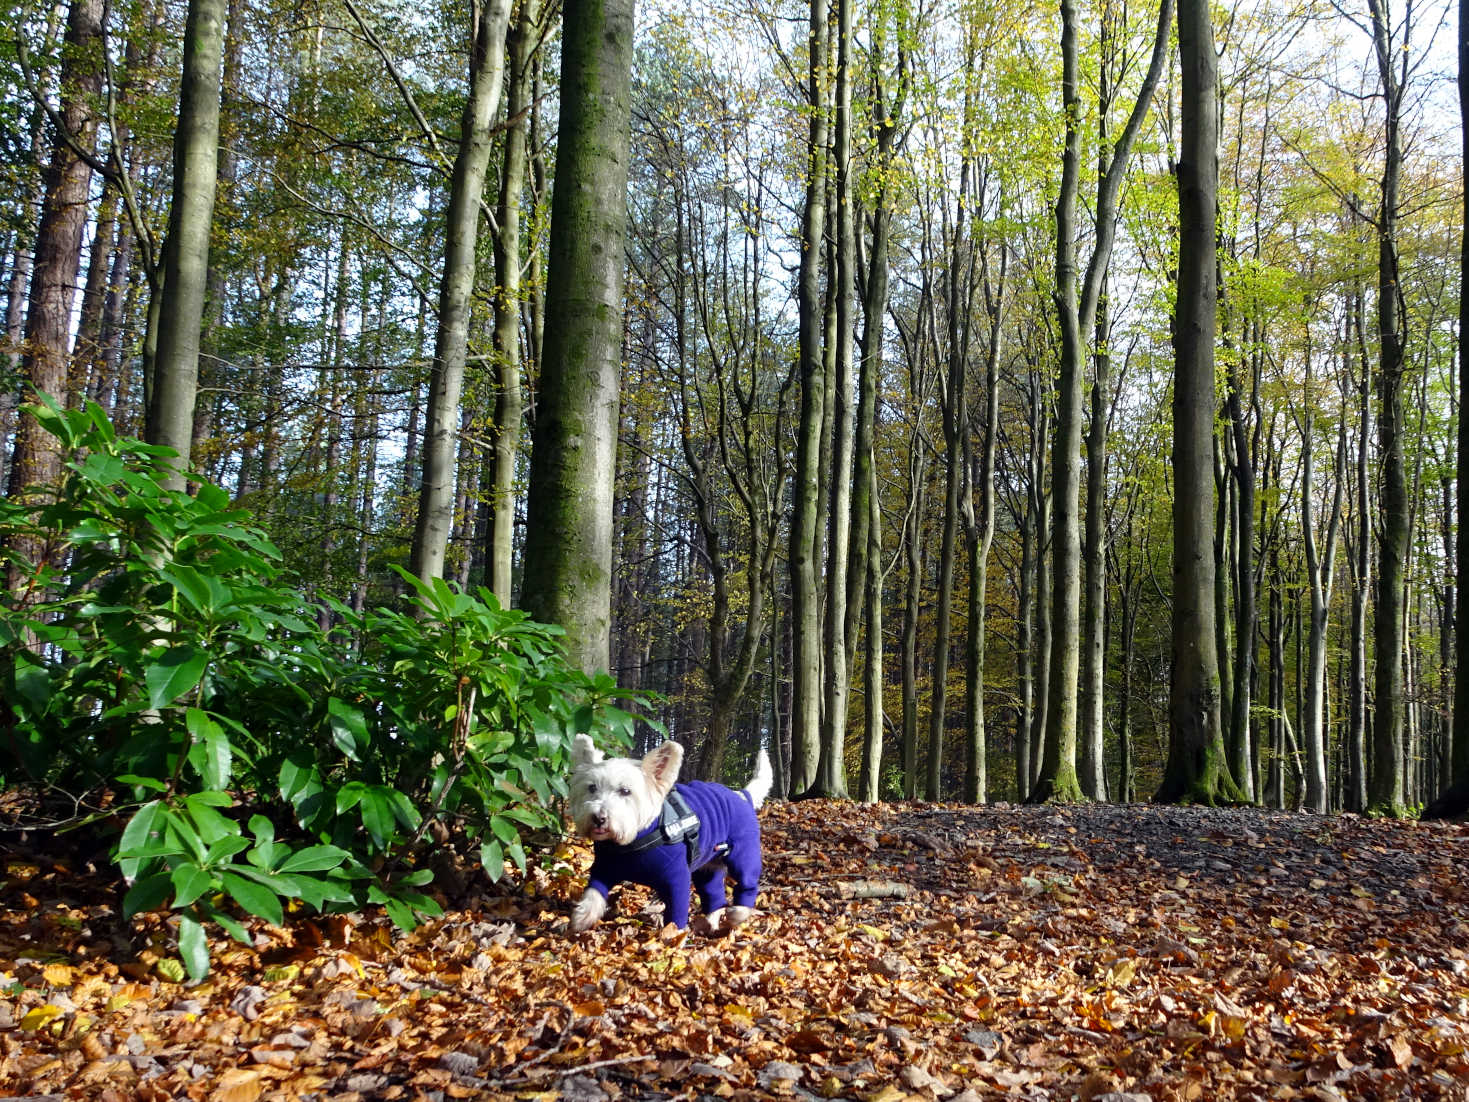 poppysocks explores the woods in pollock park in autumn